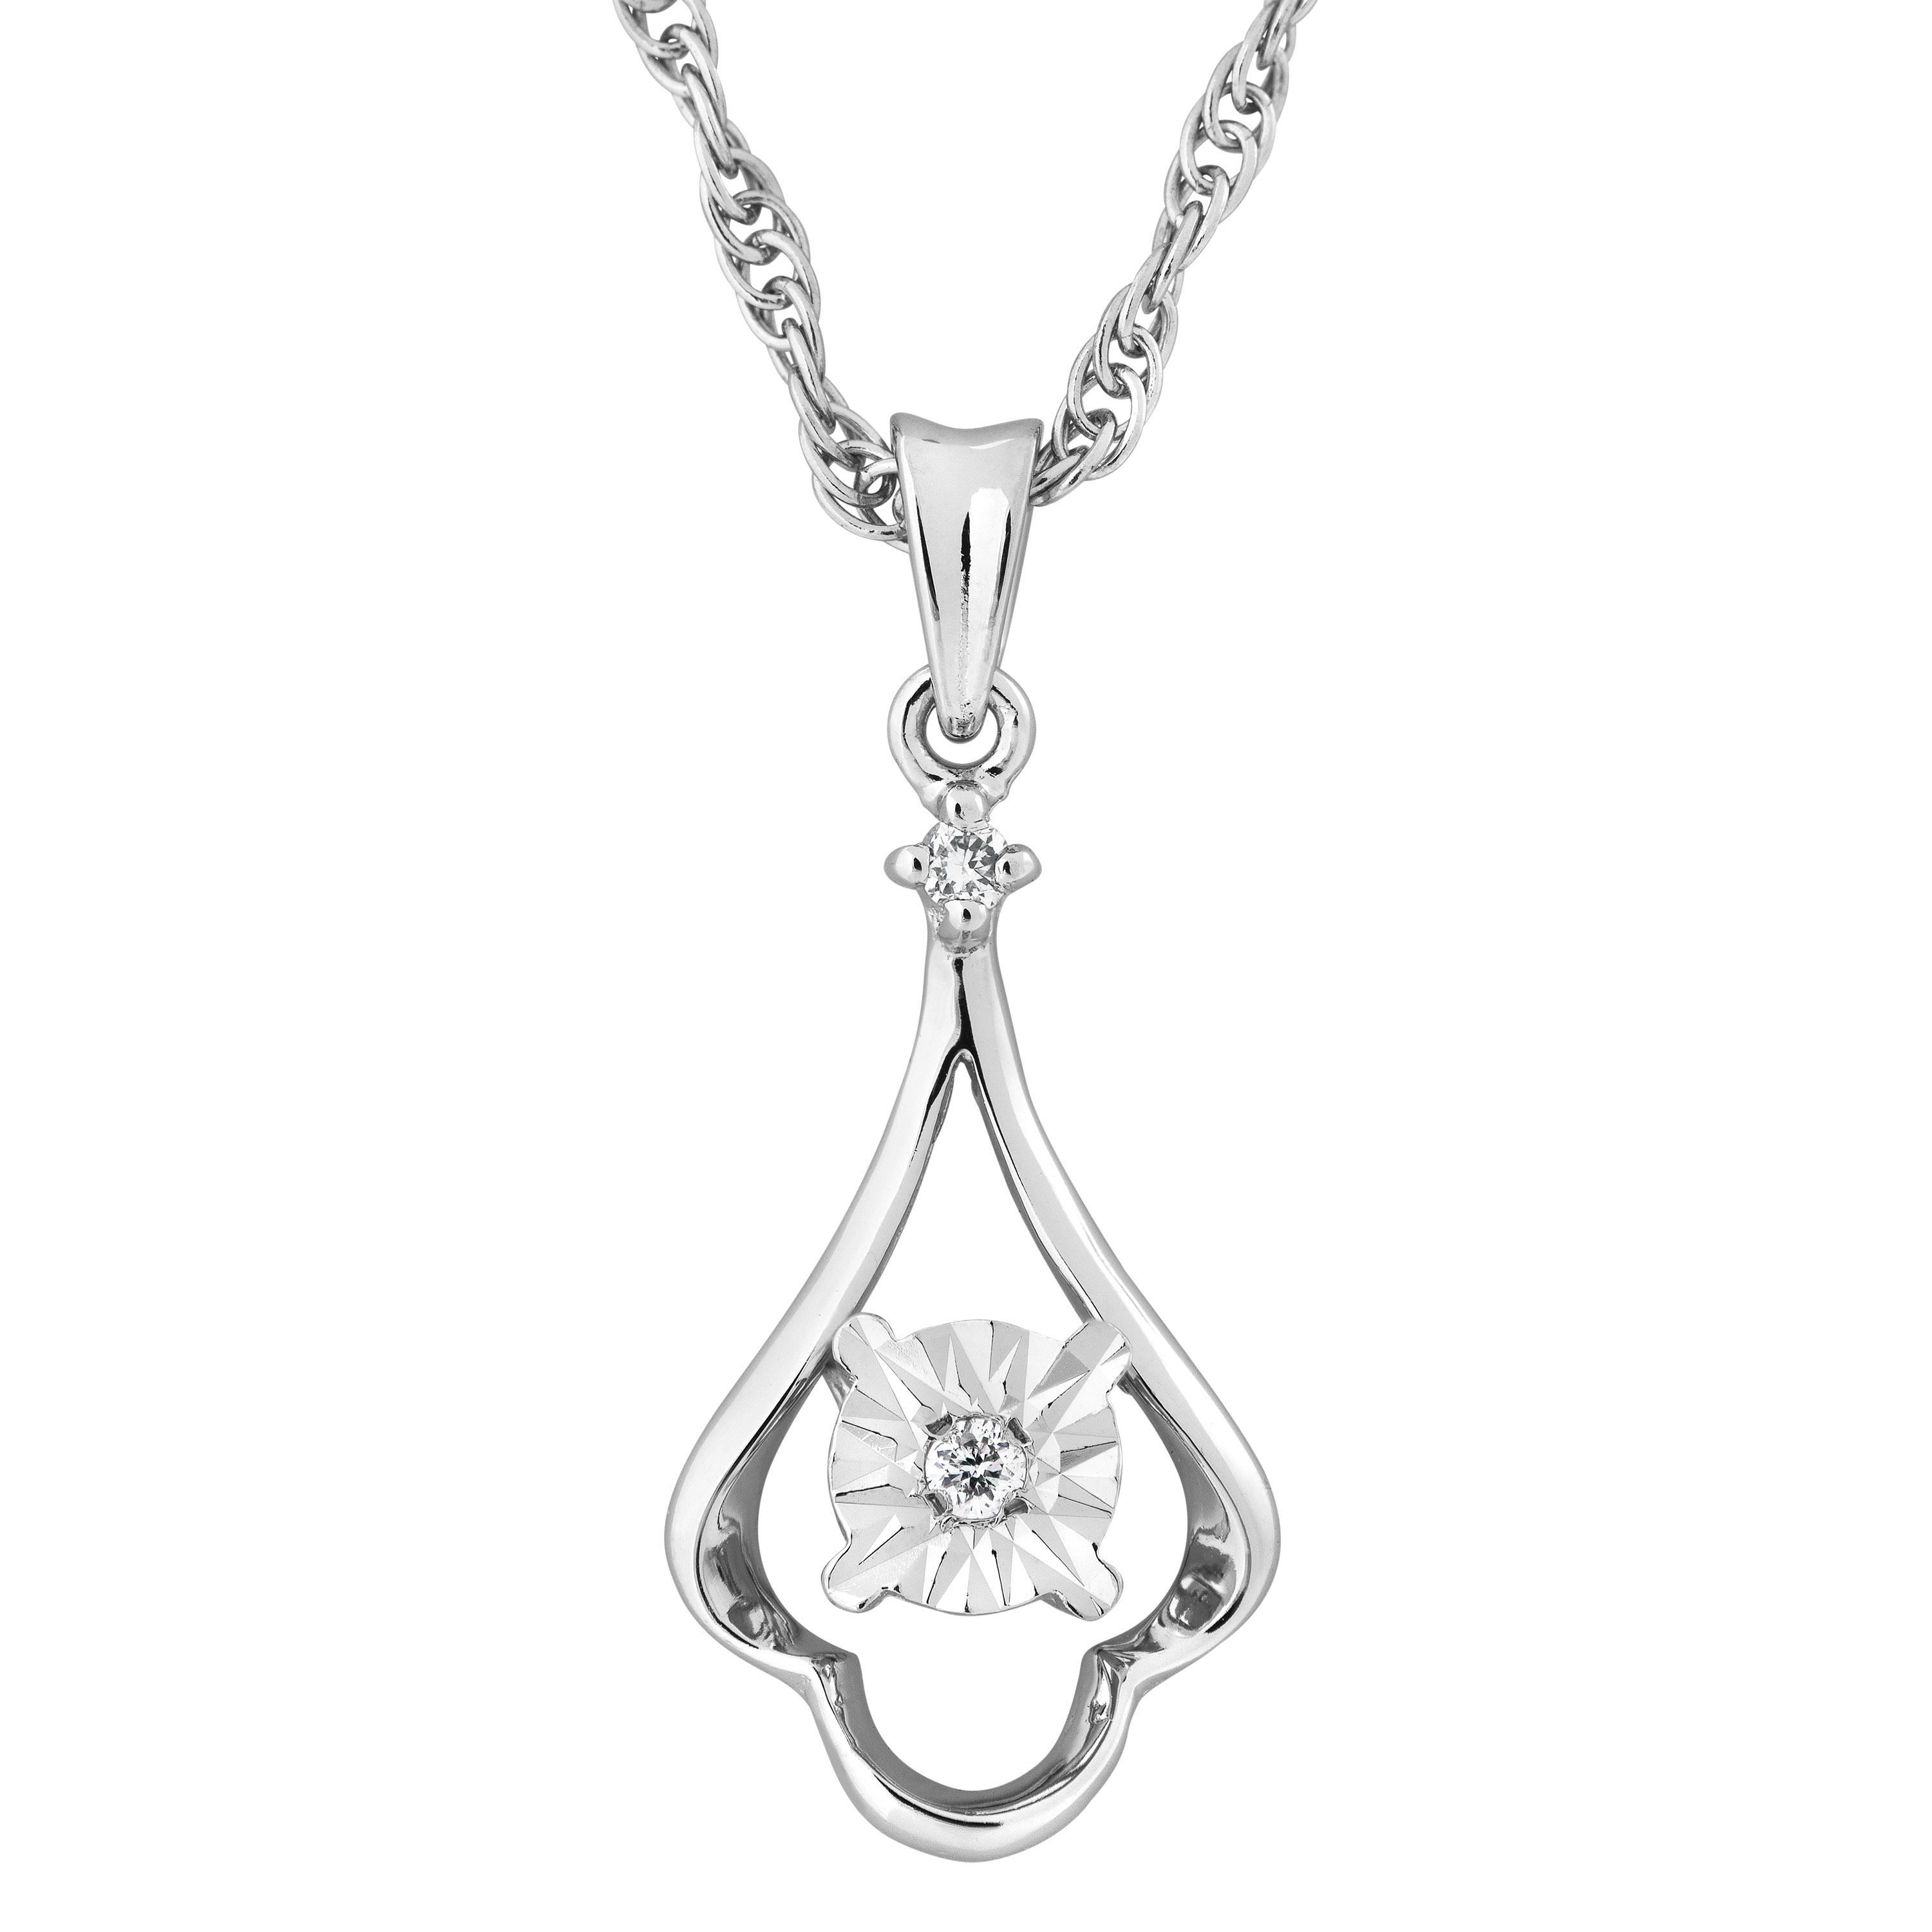 Diamond Trefoil Pendant Necklace, Sterling Silver. 